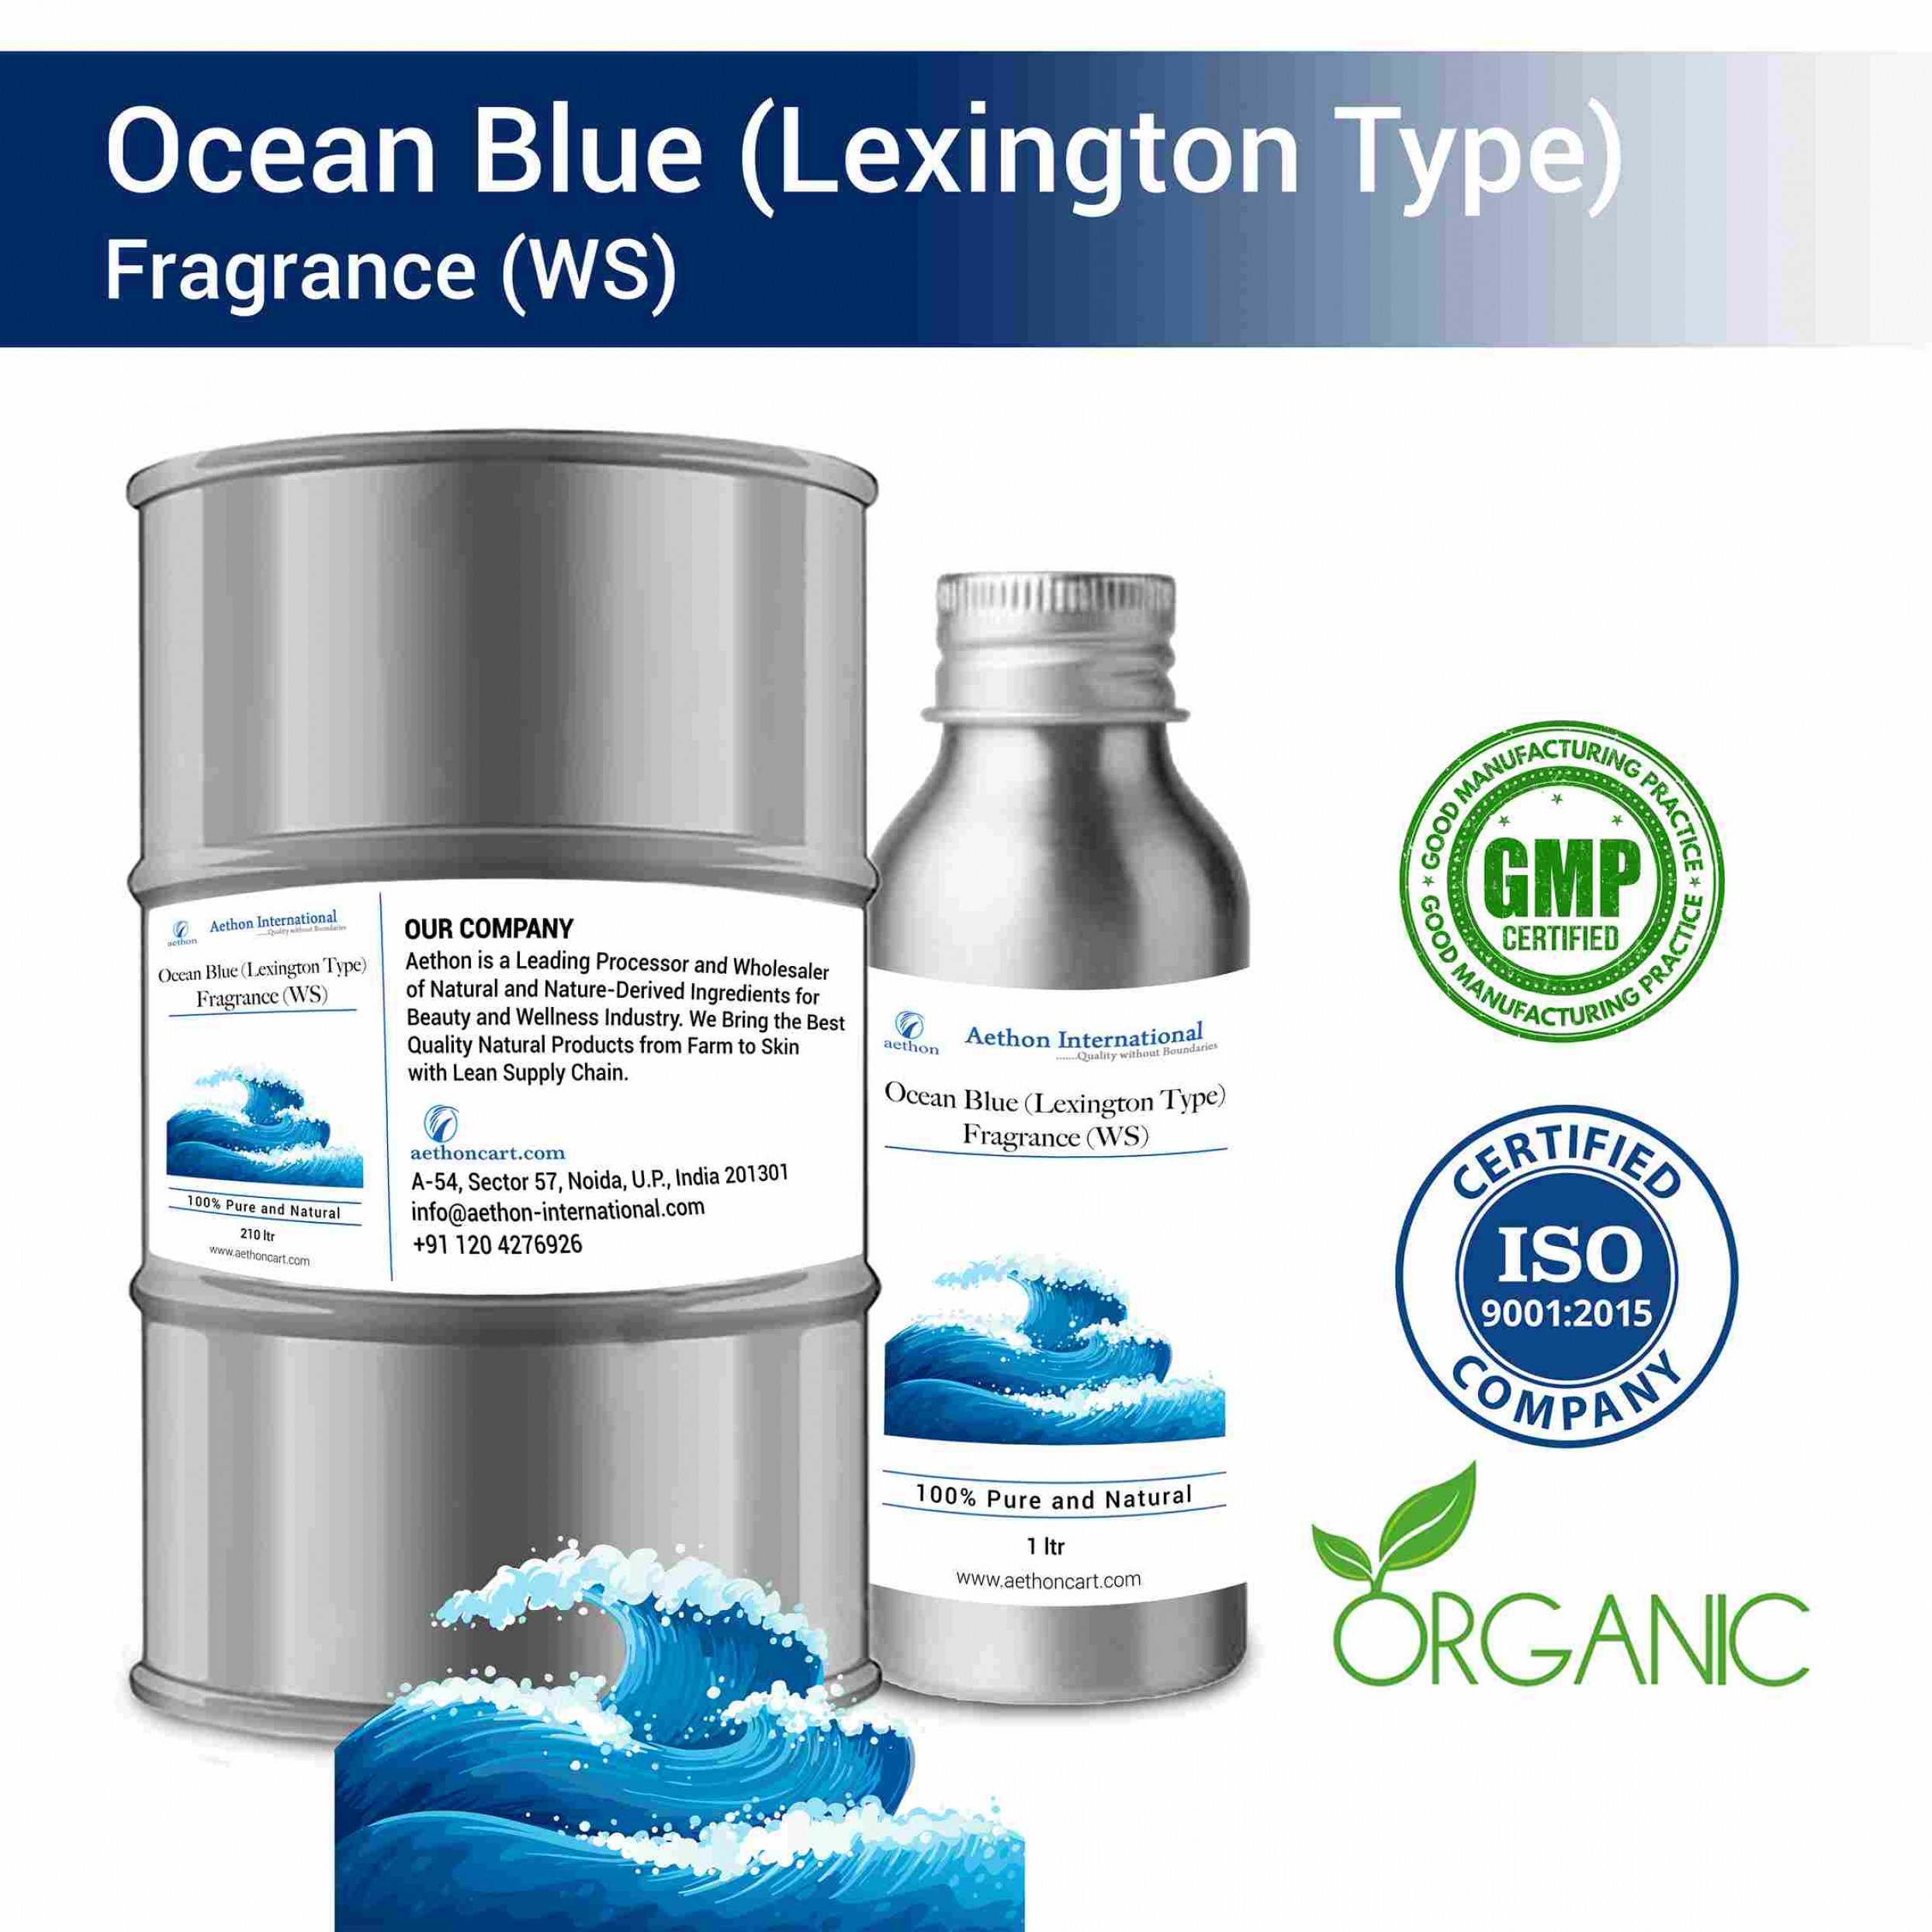 Ocean Blue (Lexington Type) Fragrance (WS)